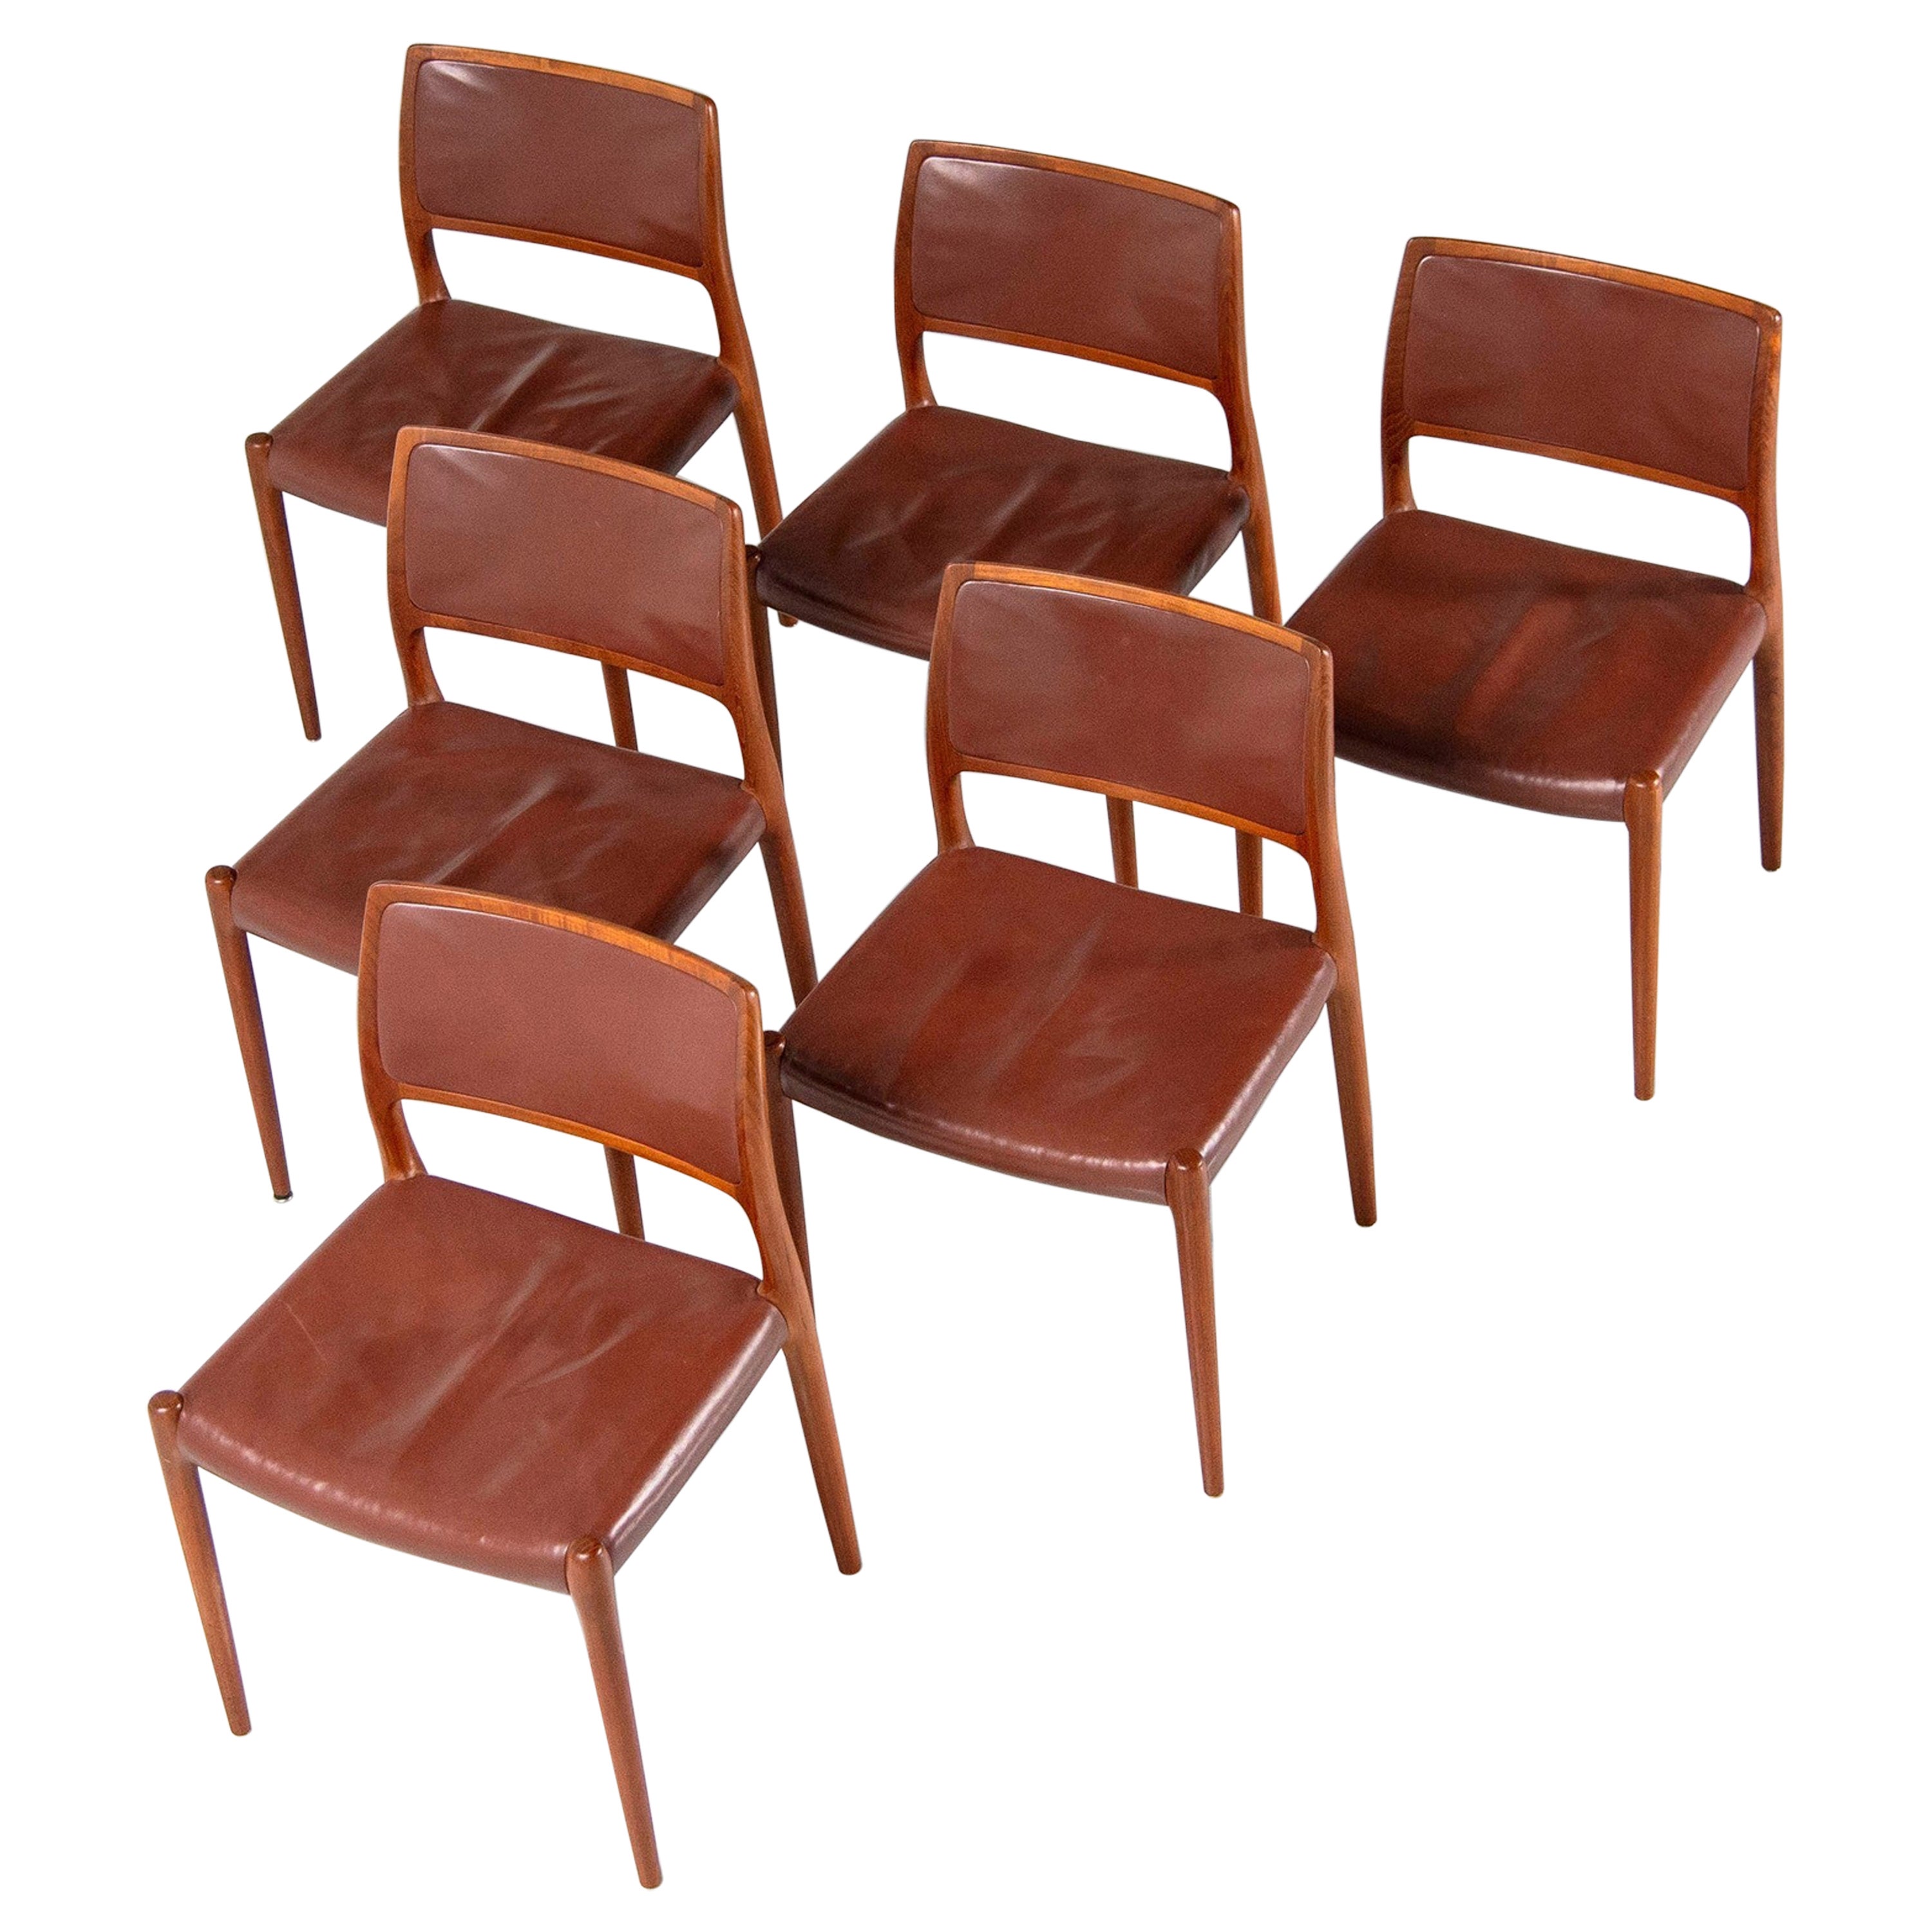 Model 80 Chair